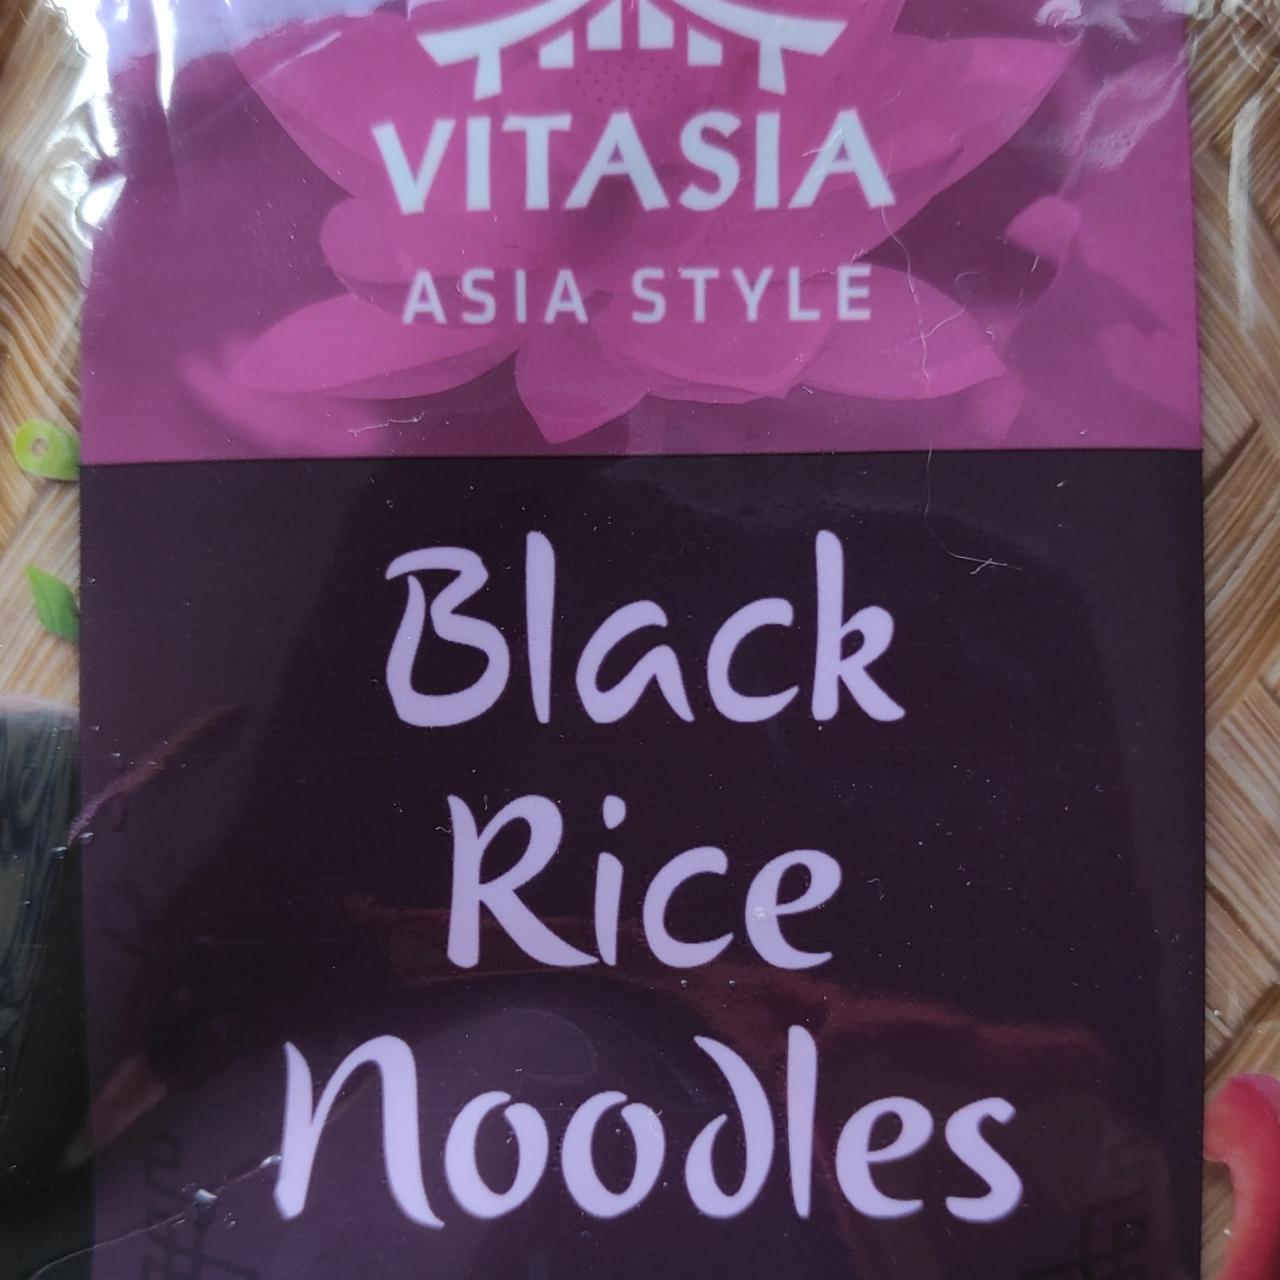 Fotografie - Black Rice Noodles Vitasia